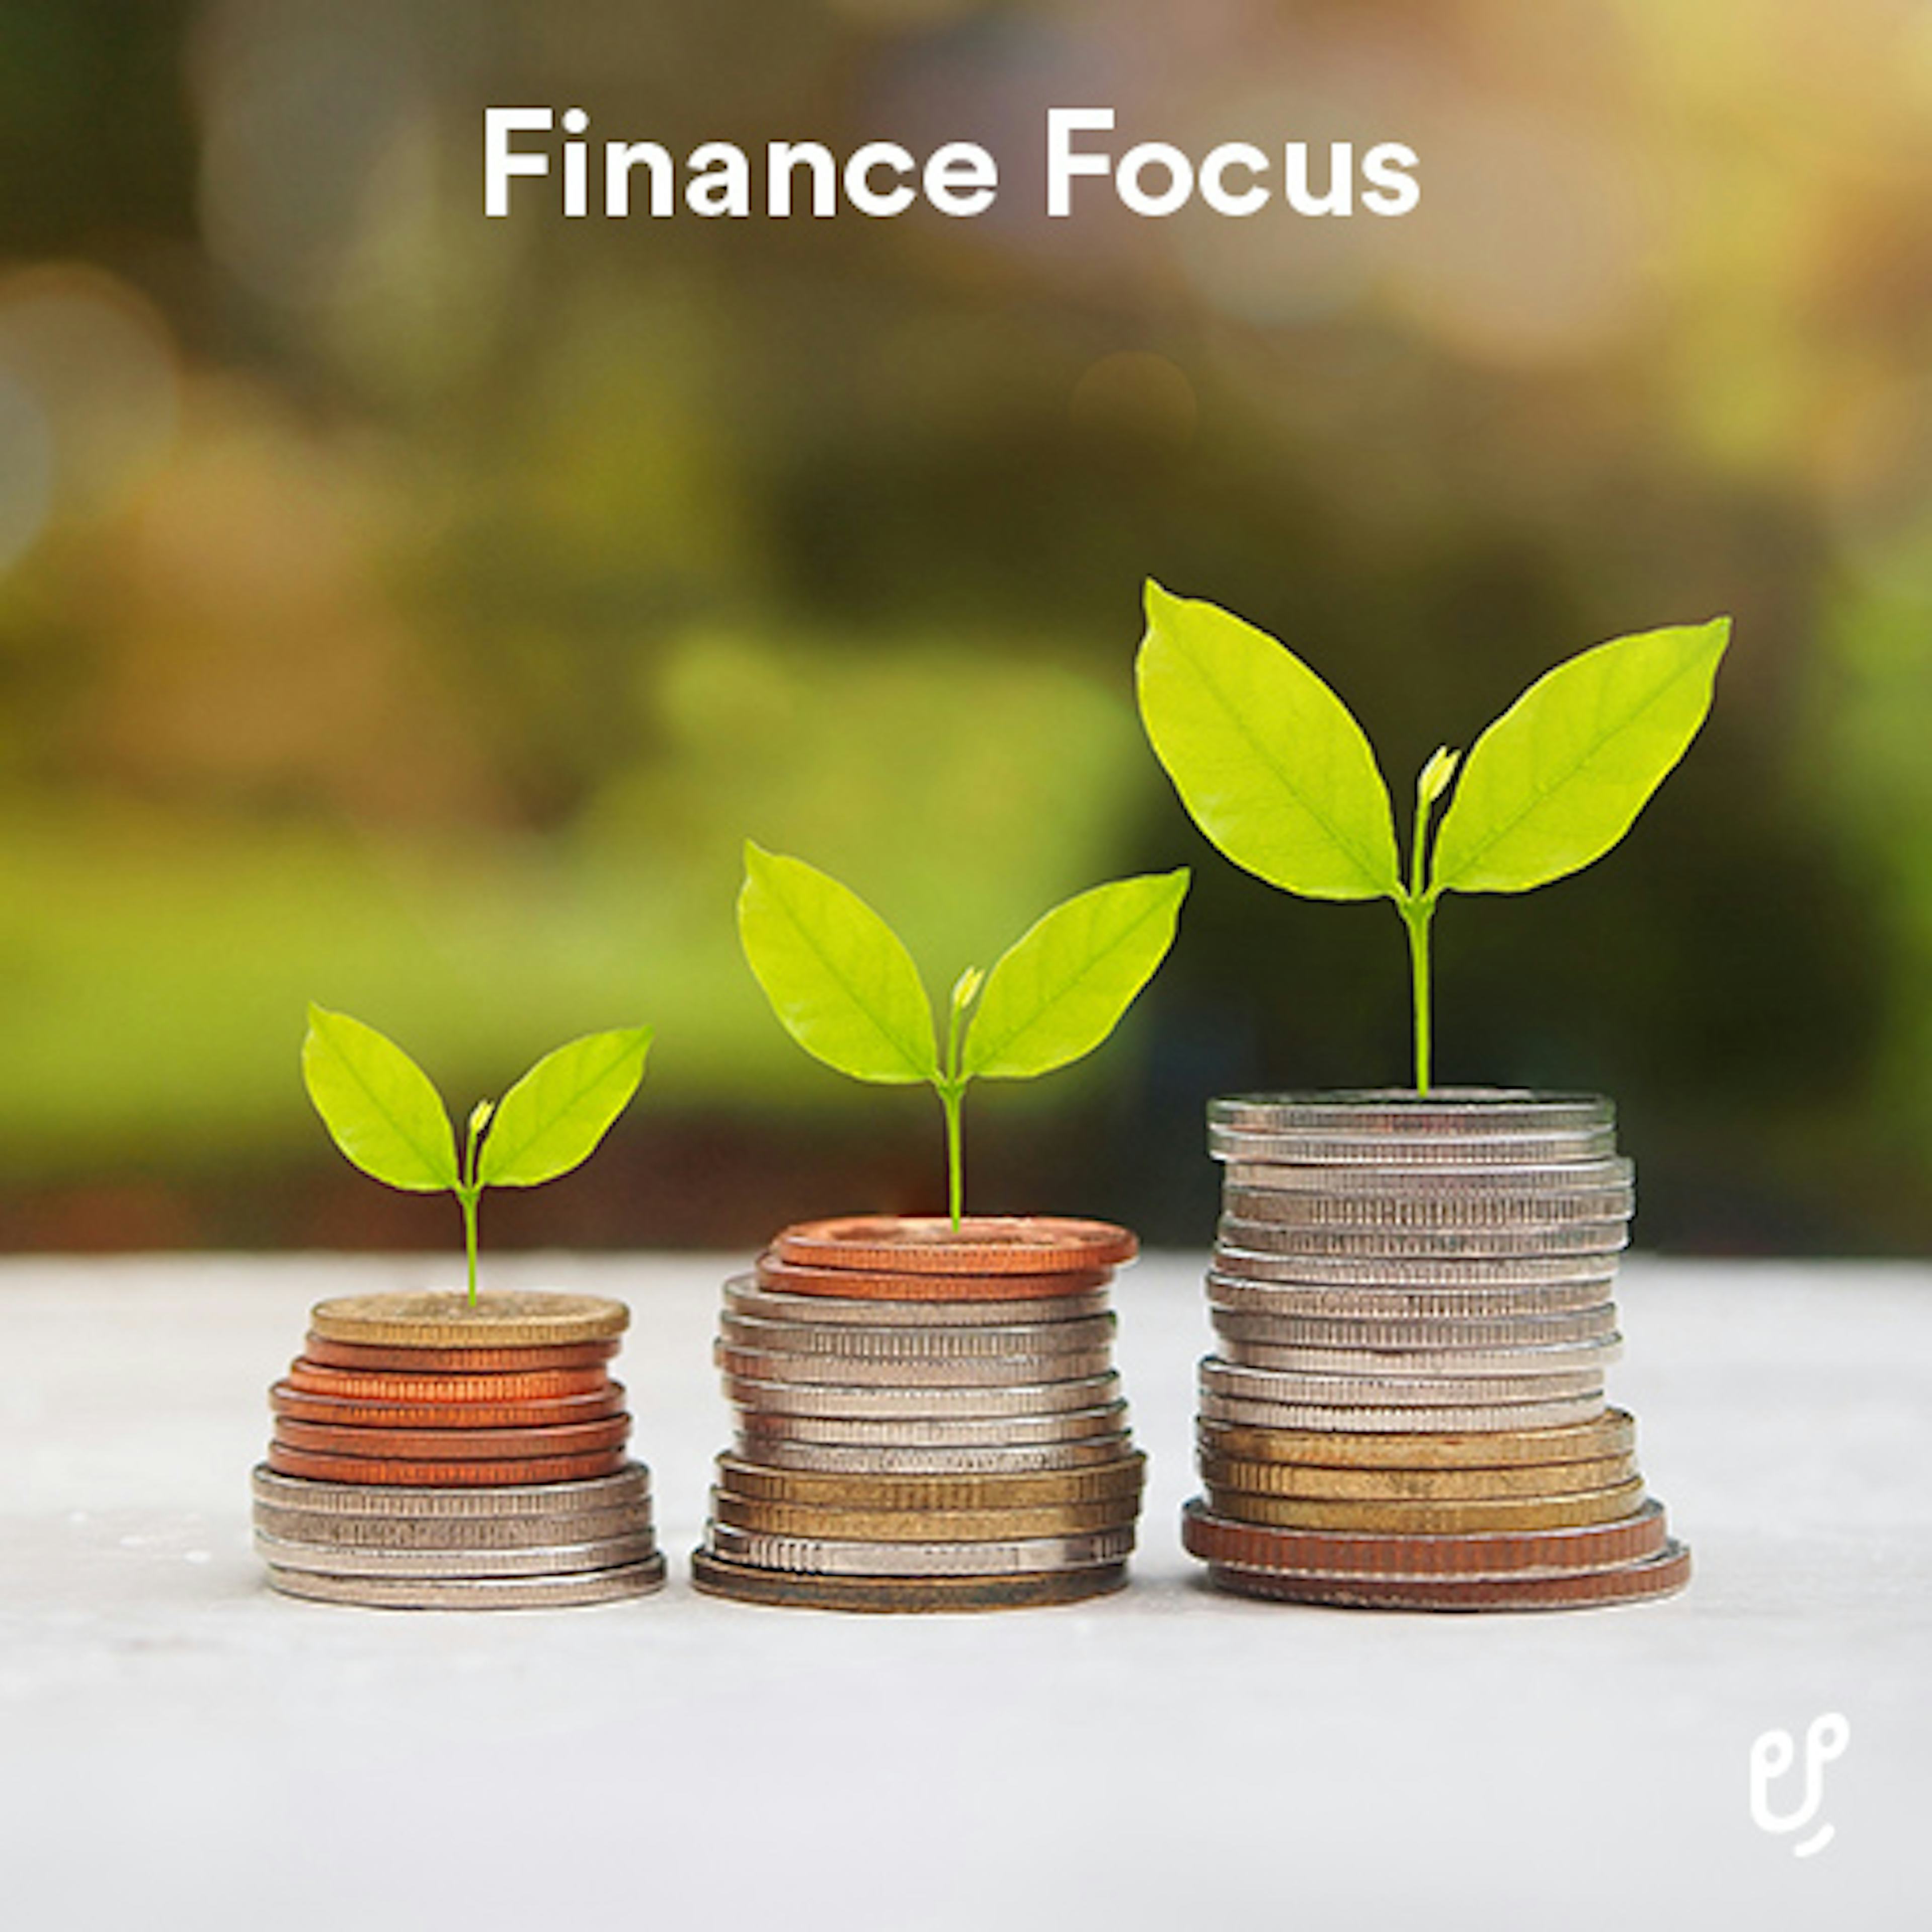 Finance Focus artwork